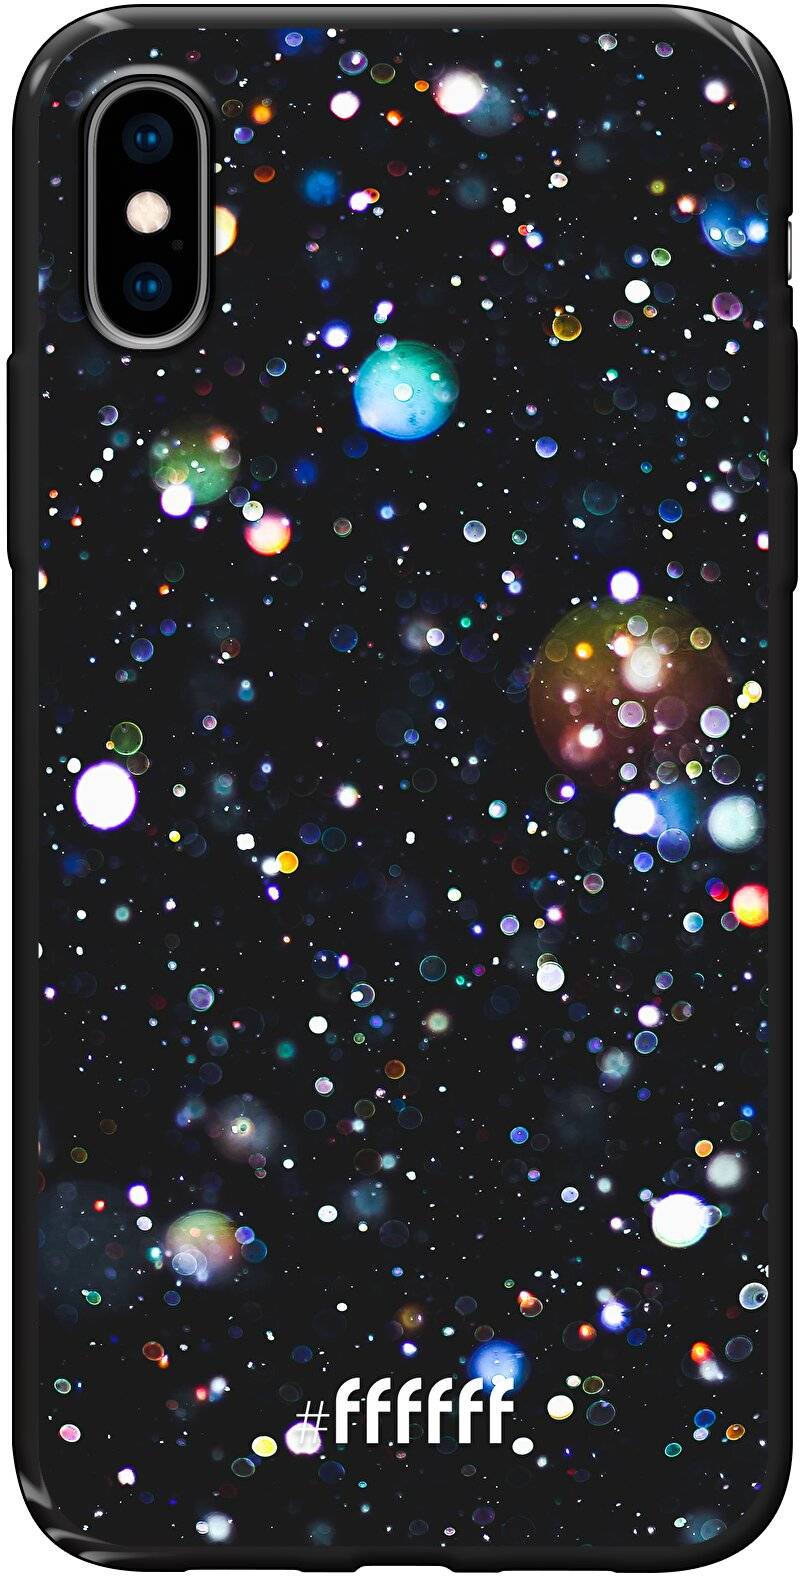 Galactic Bokeh iPhone Xs